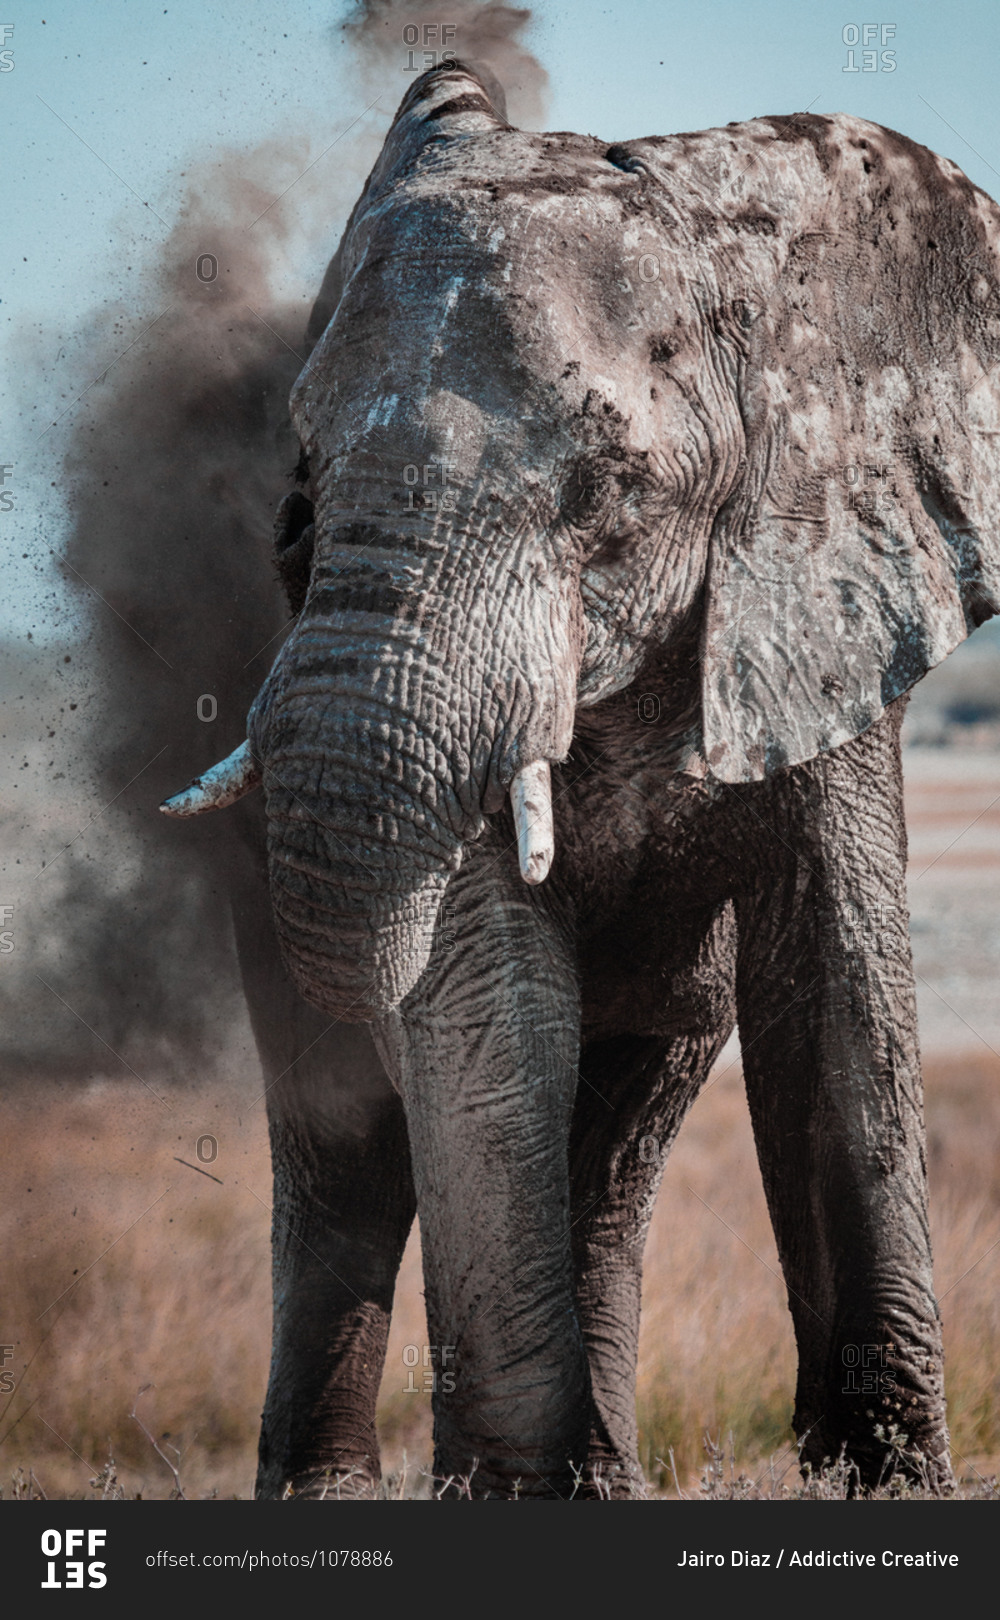 Wild elephant walking in savanna